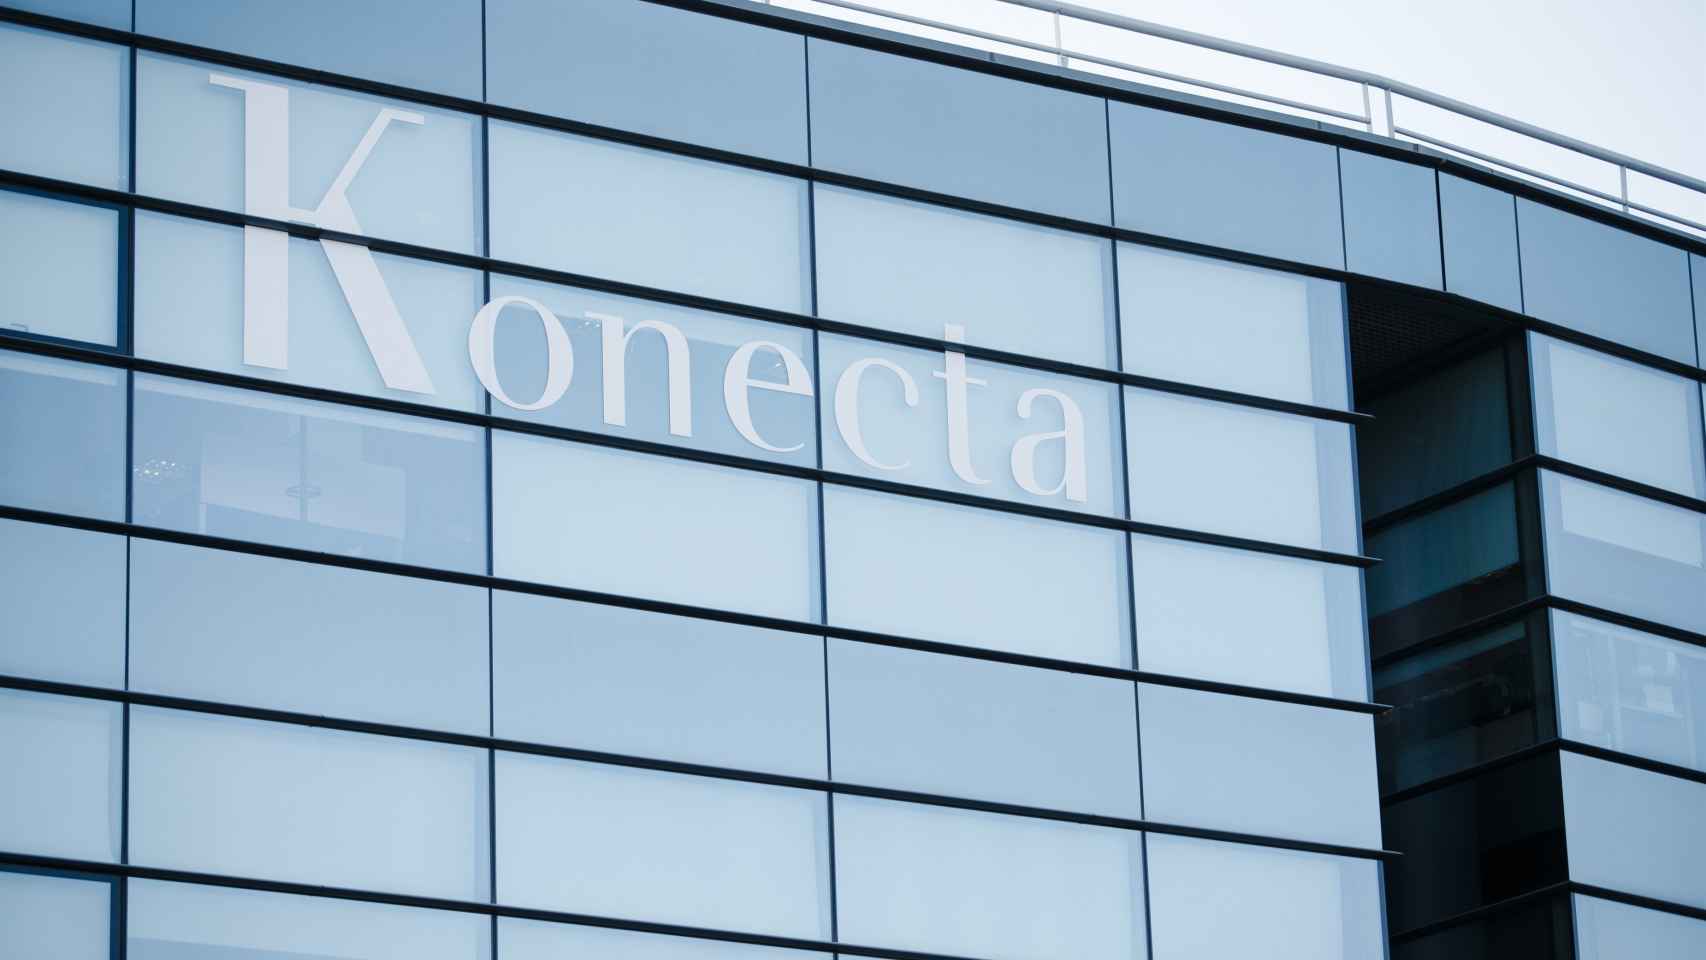 Edificio de la sede de la teleoperadora Konecta / KONECTA